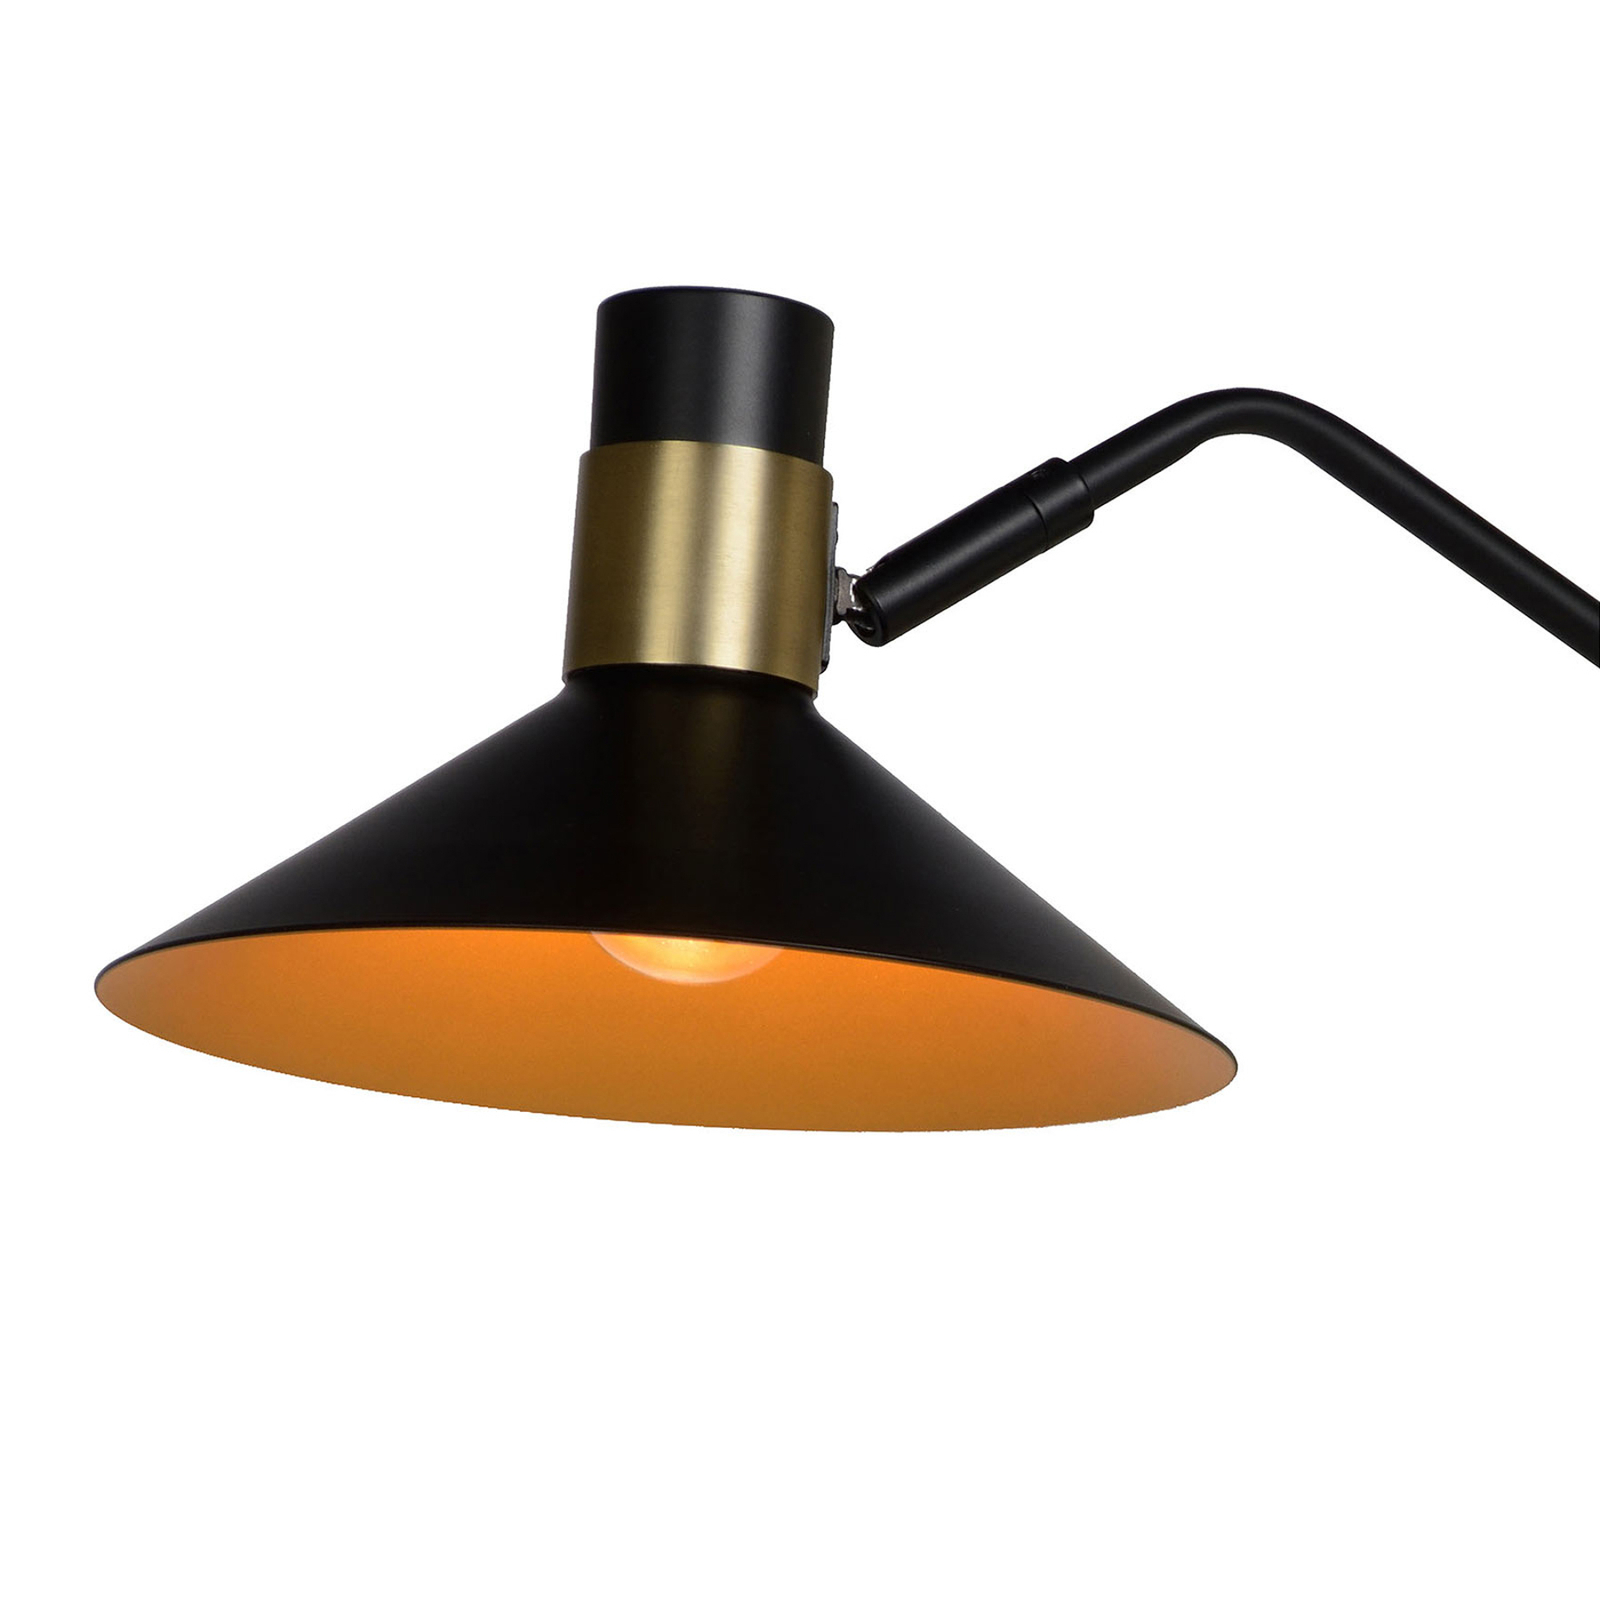 Pepijn floor lamp in black and gold, 1-bulb